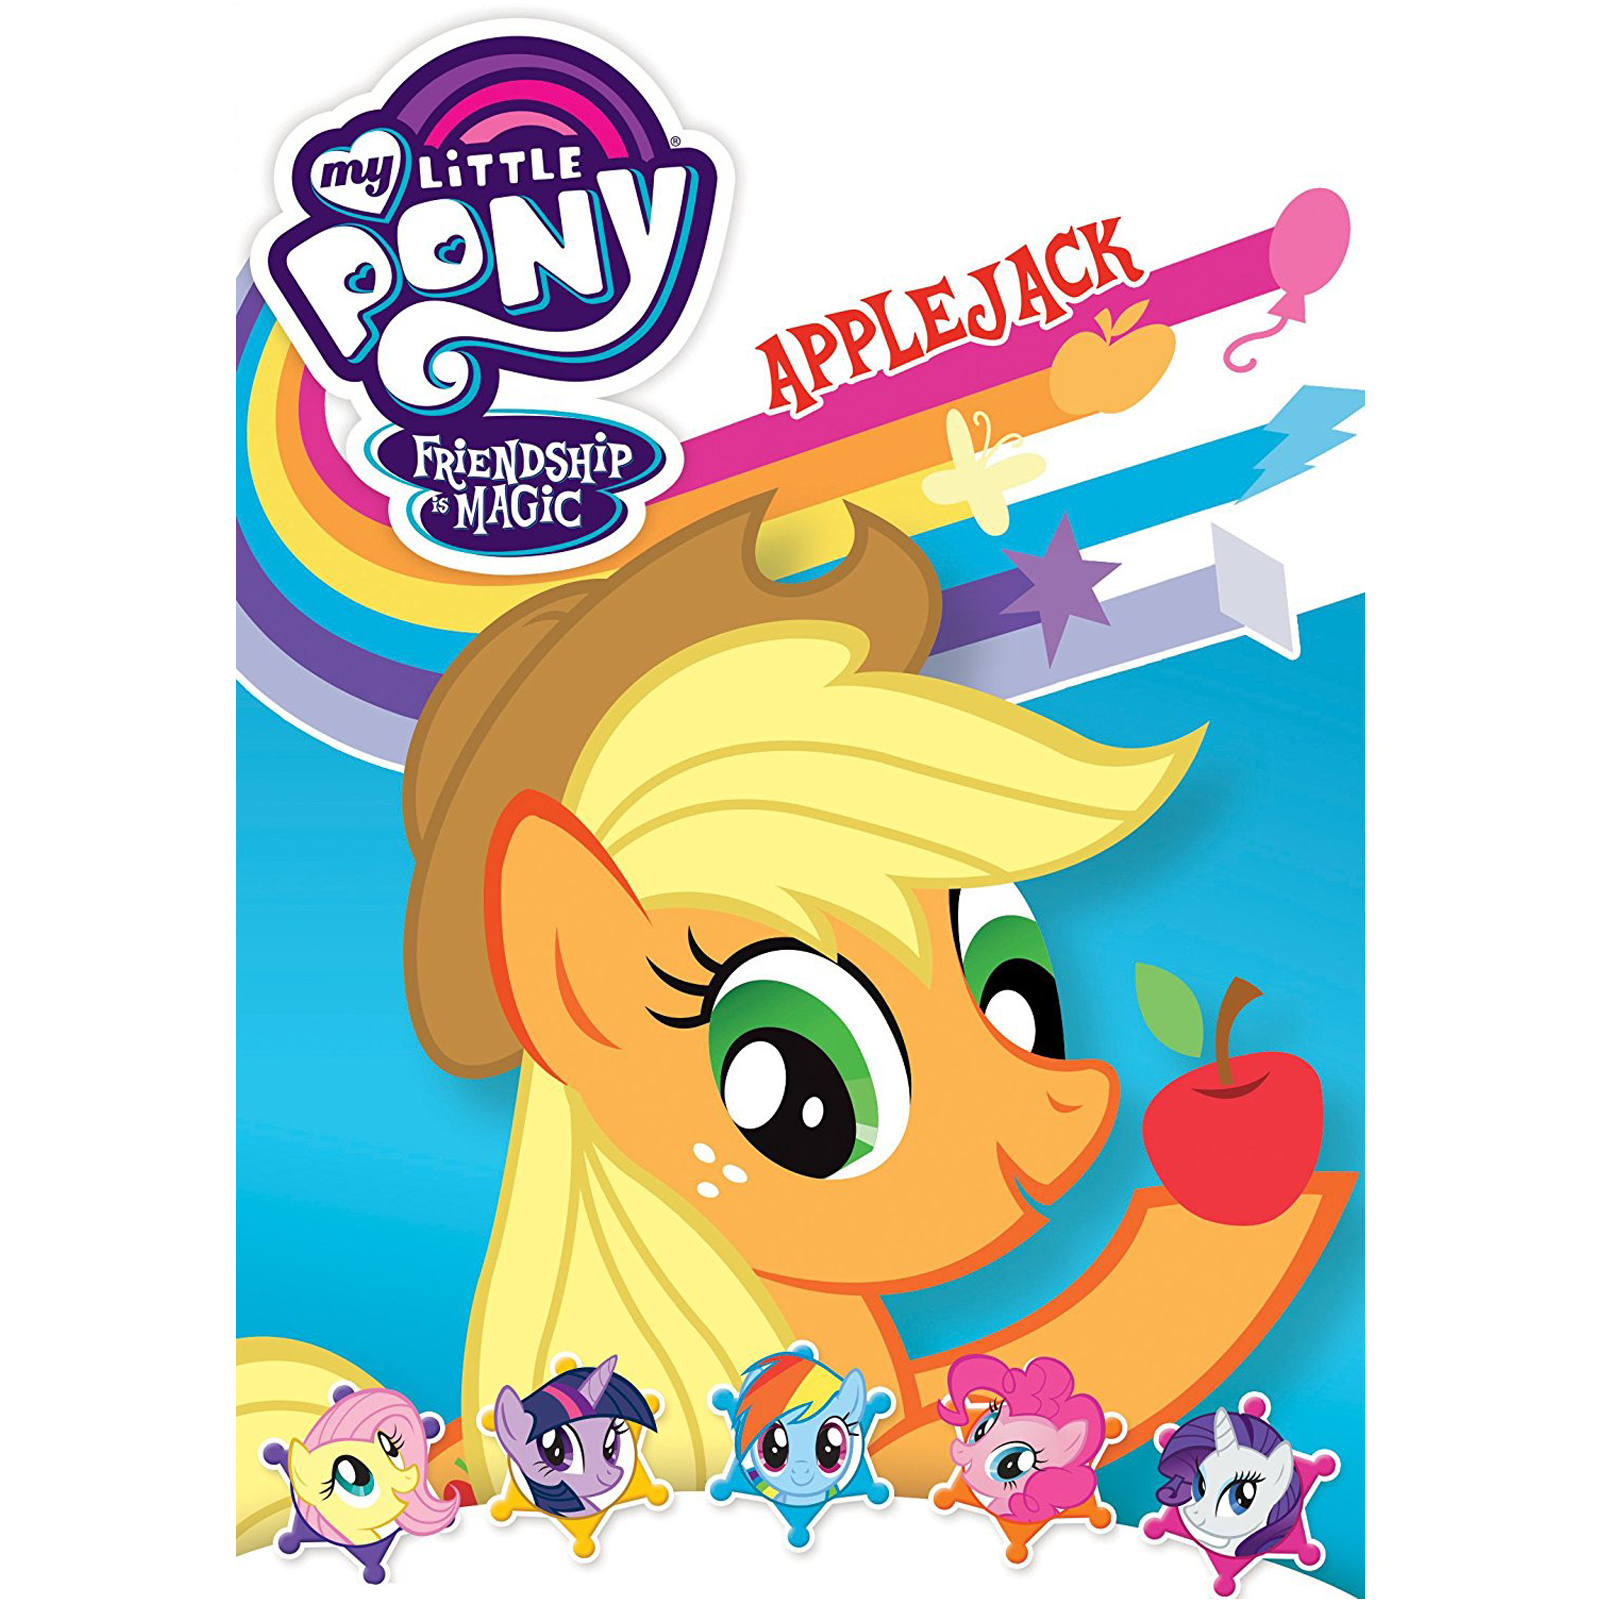 My Little Pony Friendship is Magic: Applejack (DVD)